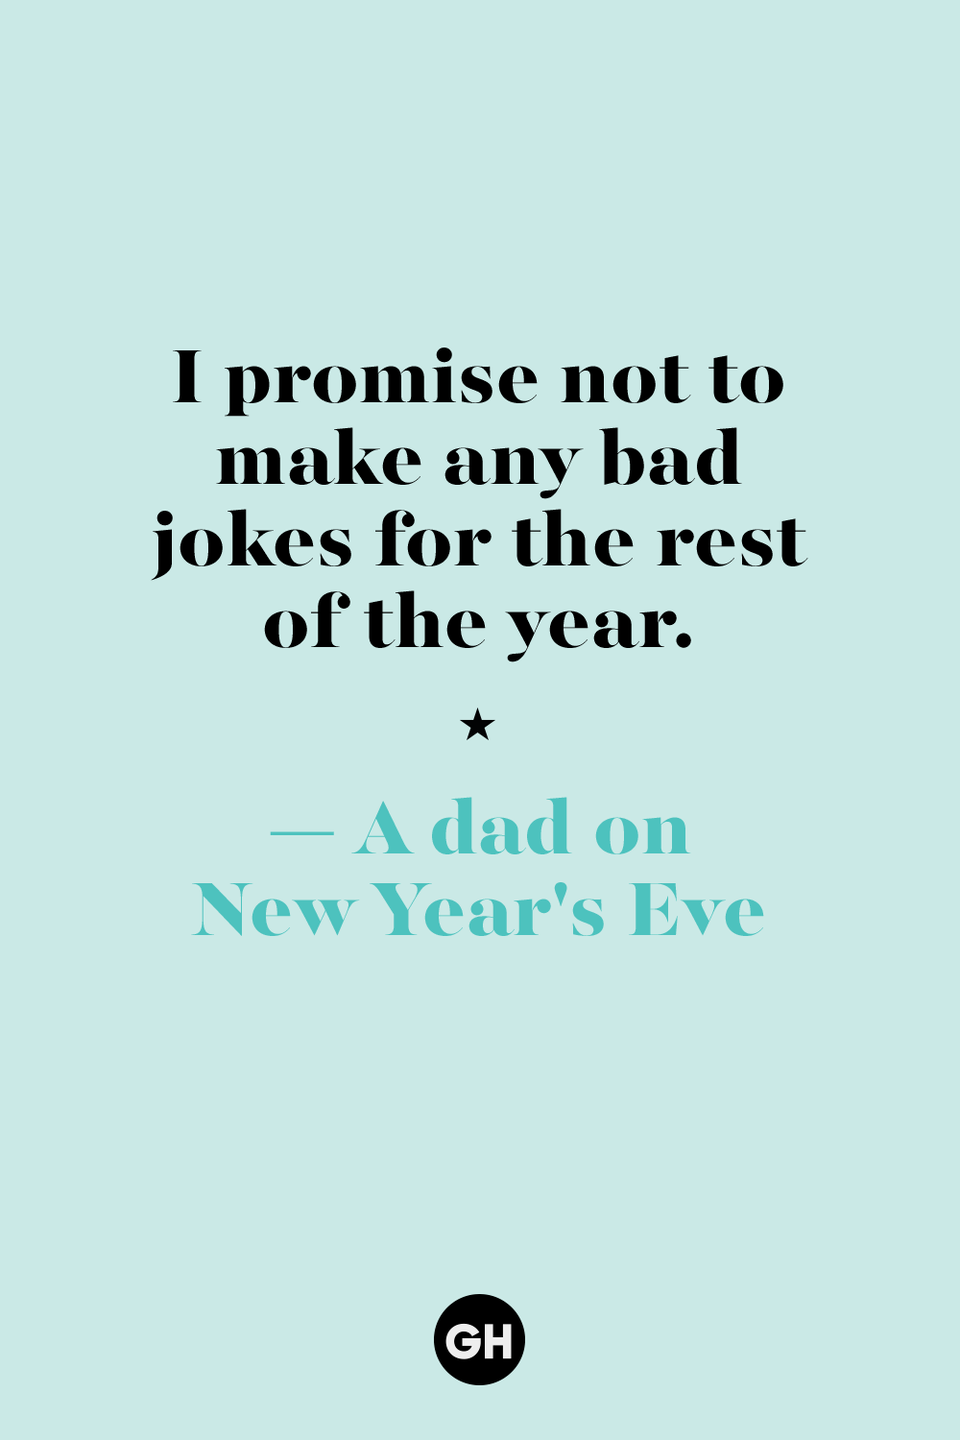 new year's jokes dad